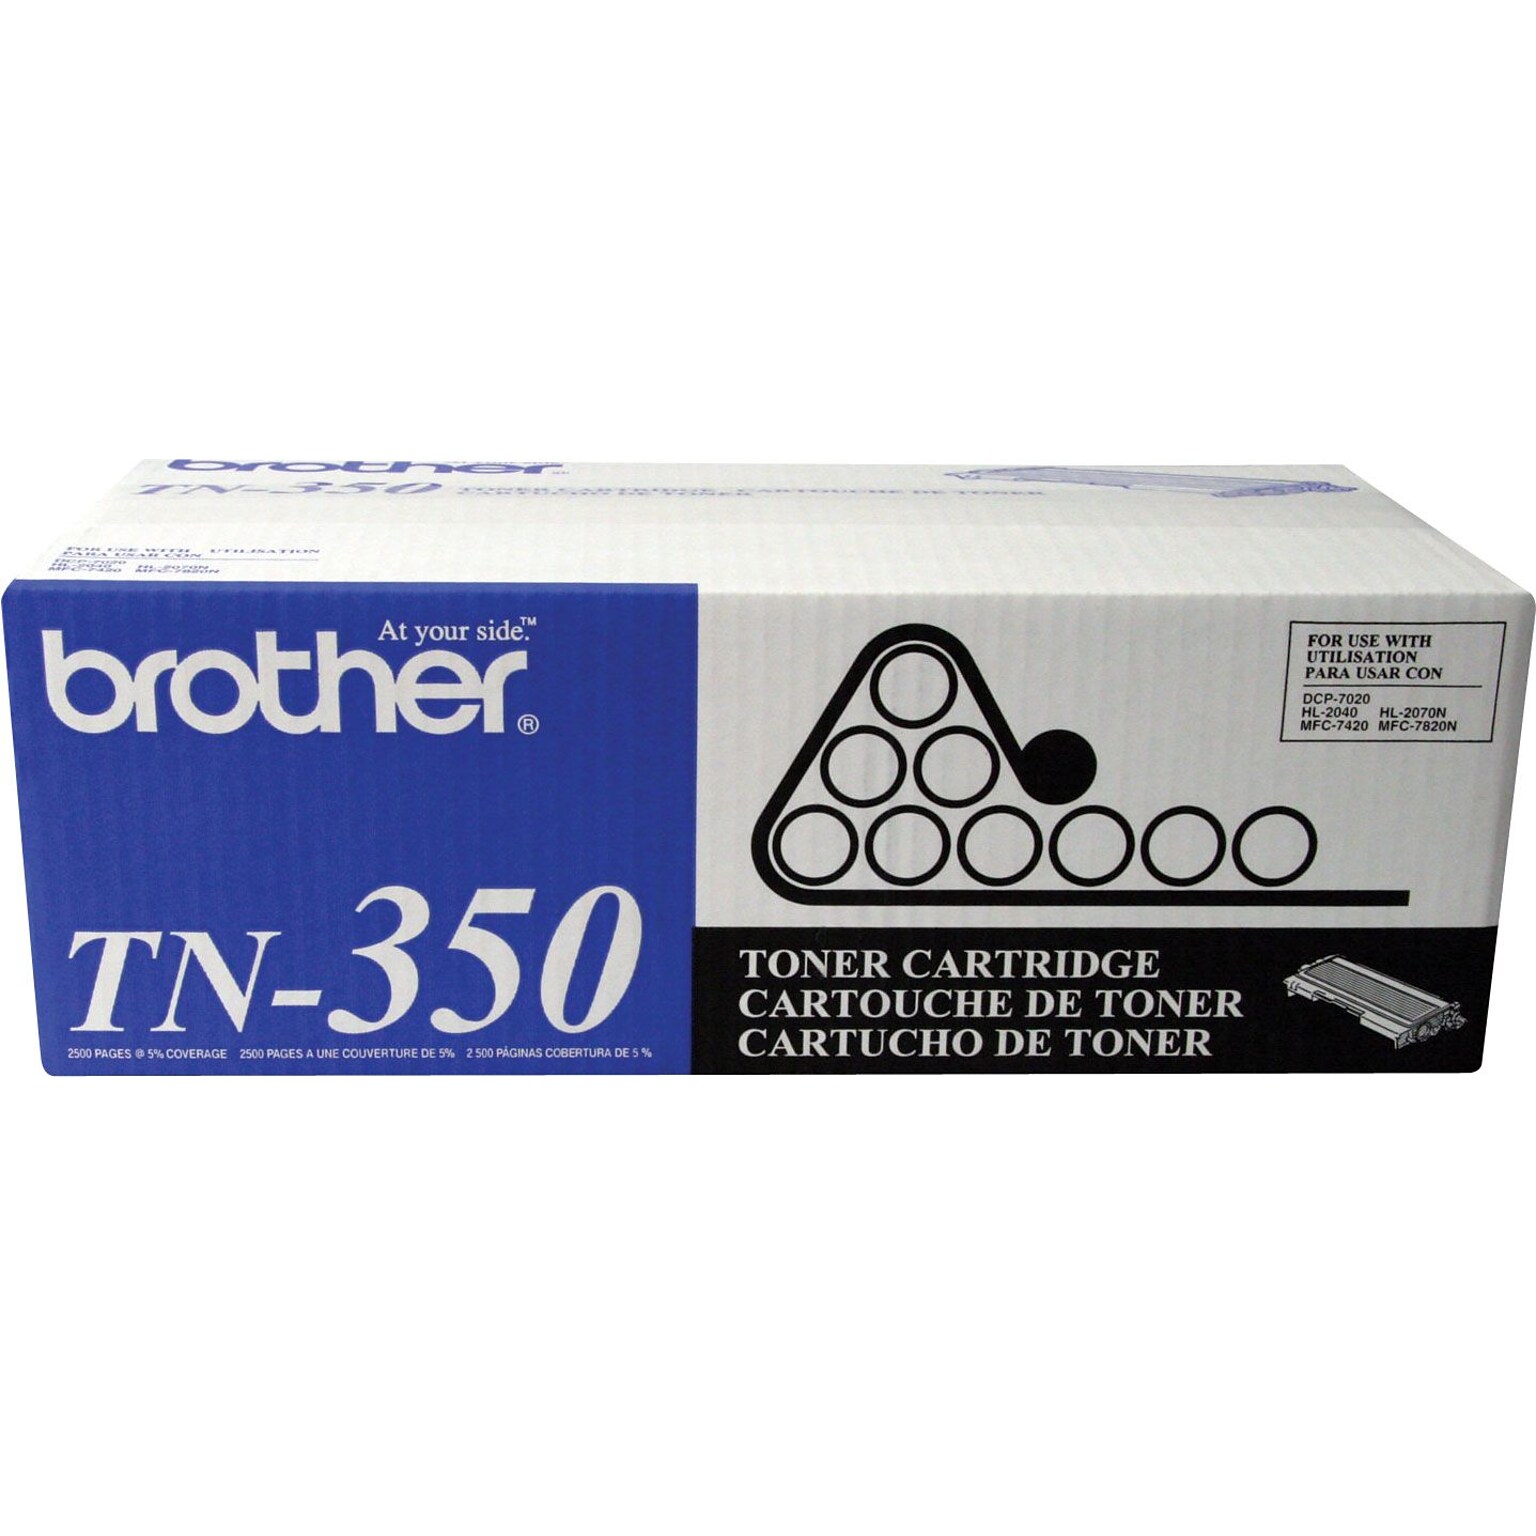 Brother TN-350 Black Standard-Yield Toner  Cartridge